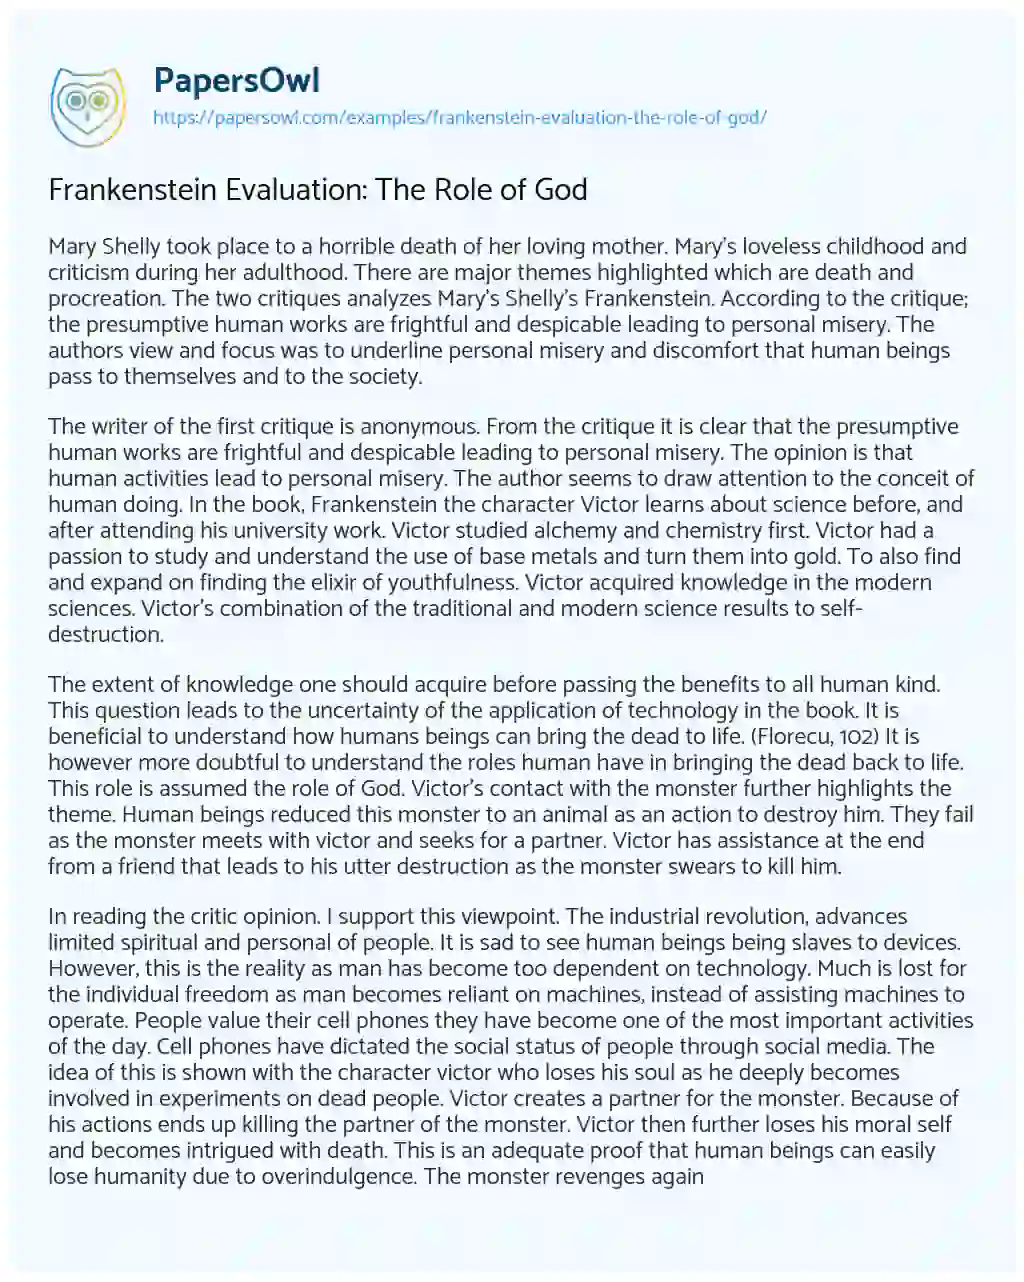 Essay on Frankenstein Evaluation: the Role of God